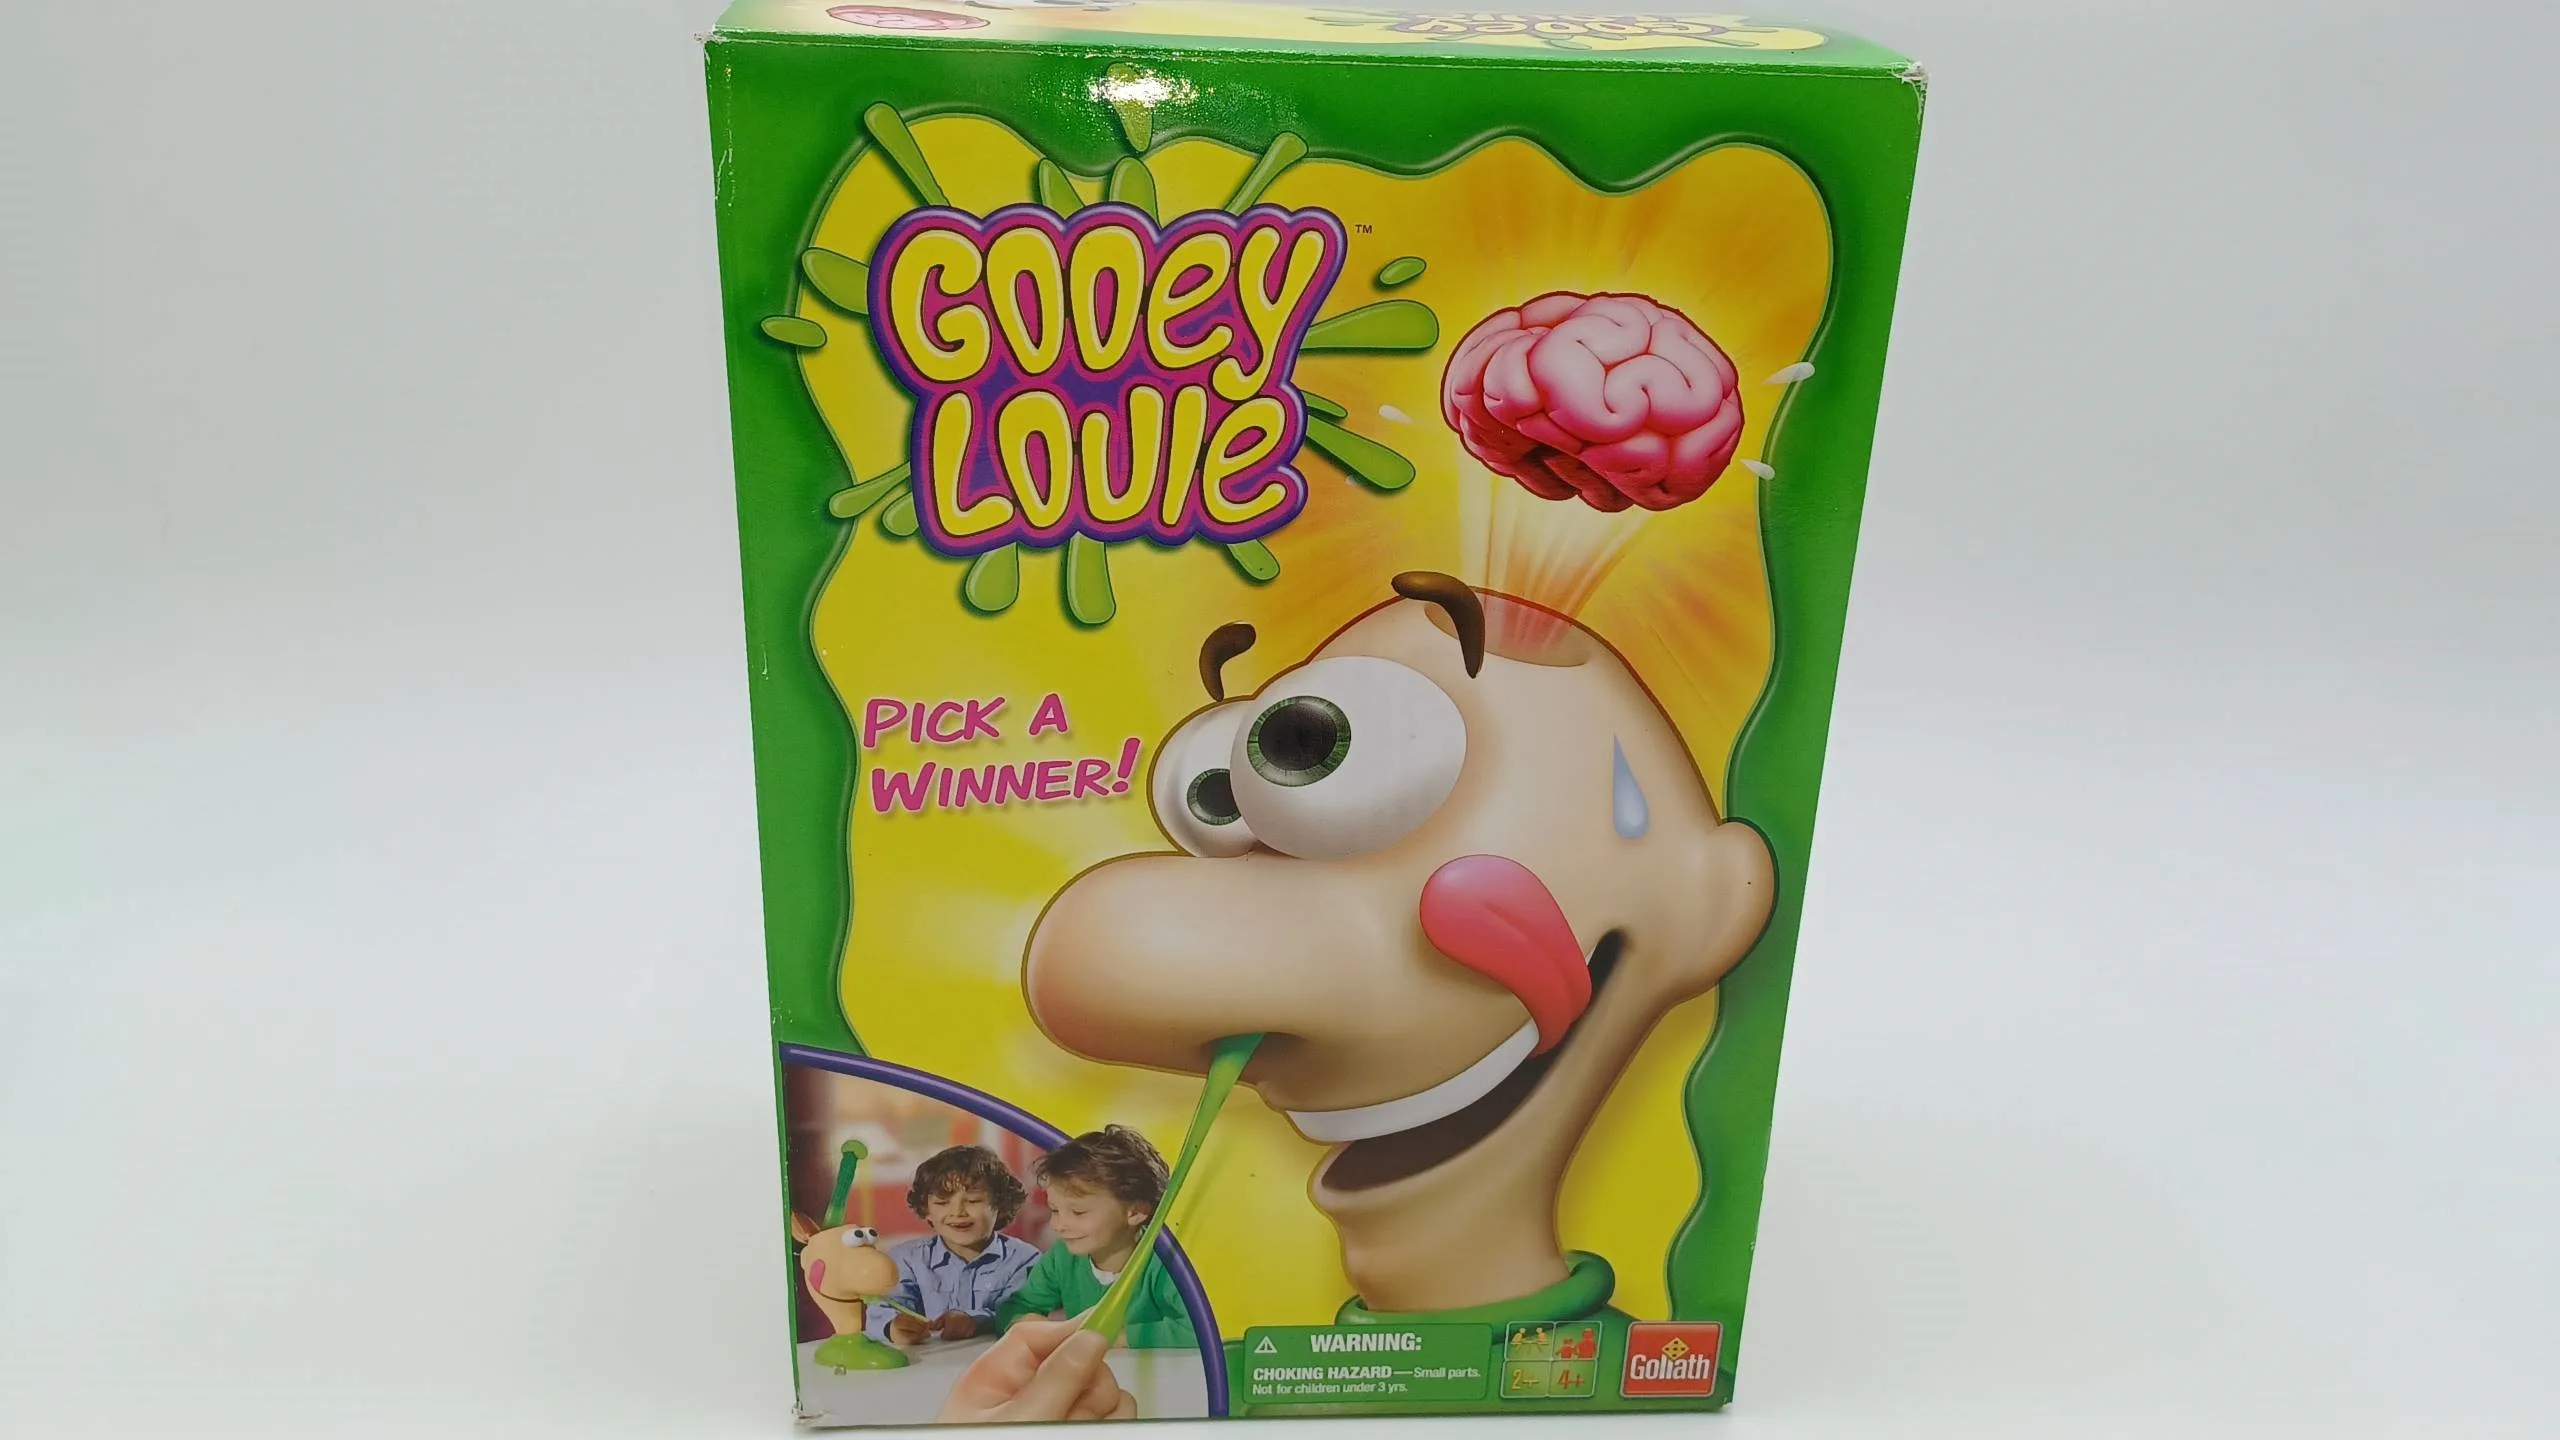 Box for Gooey Louie